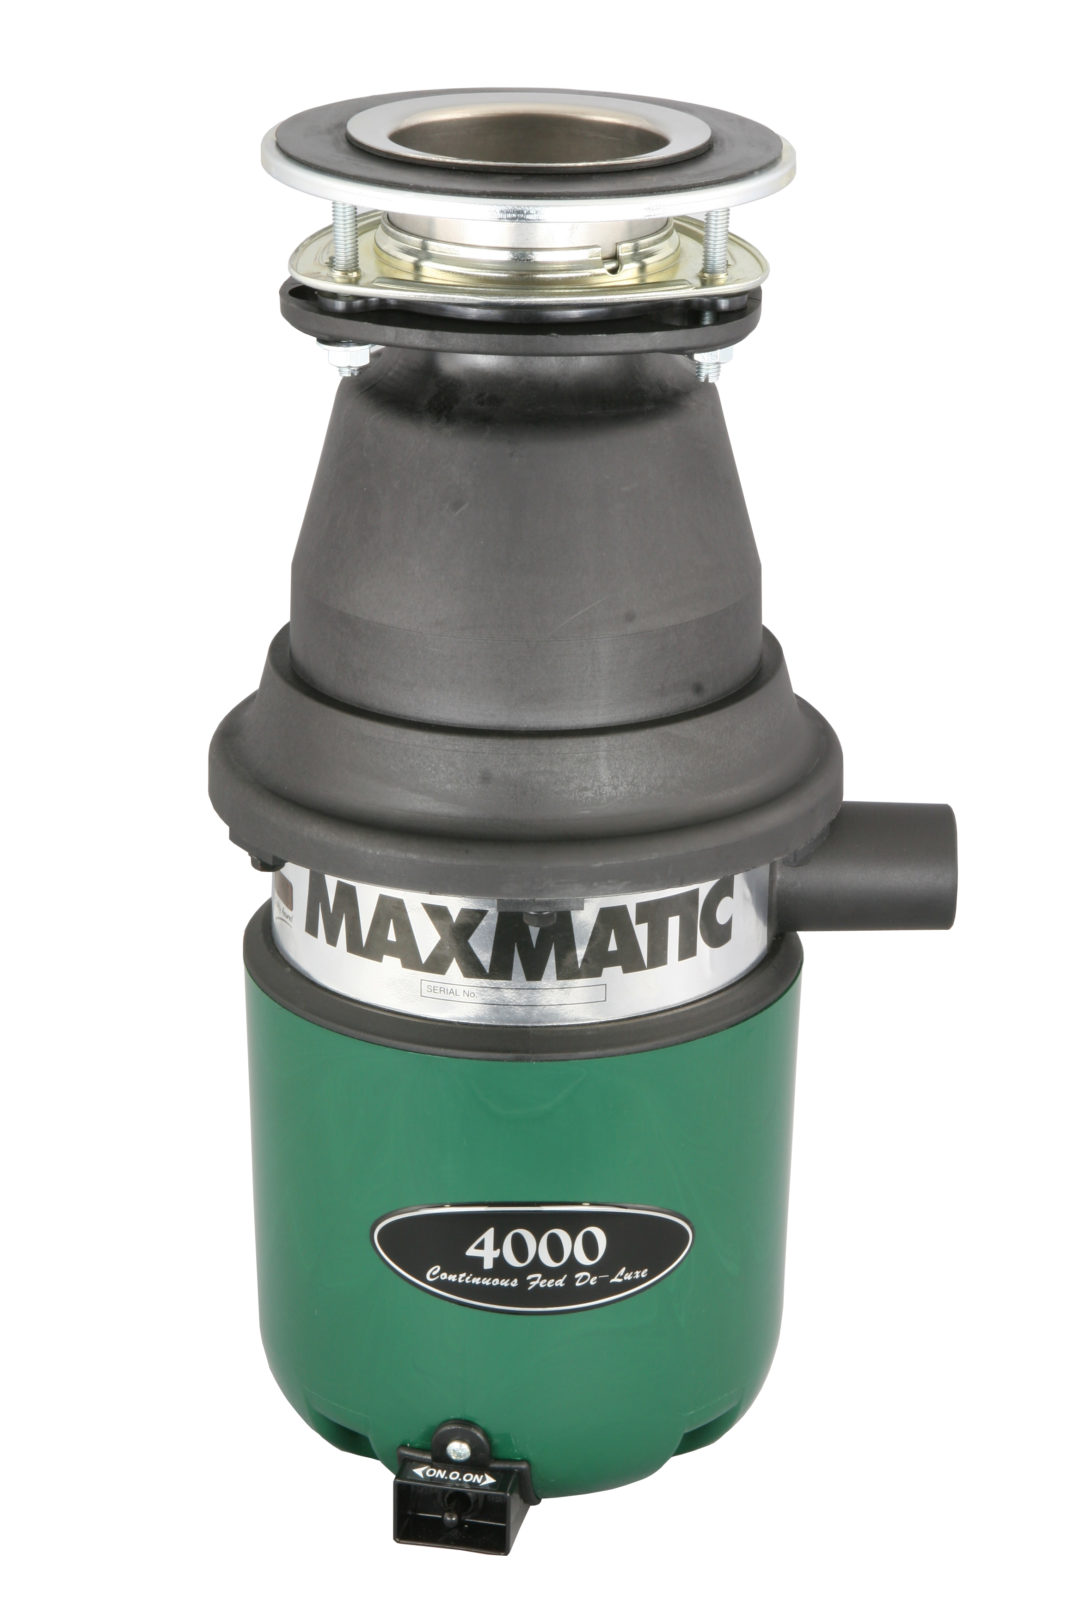 Maxmatic 4000 Classic - Max Appliances